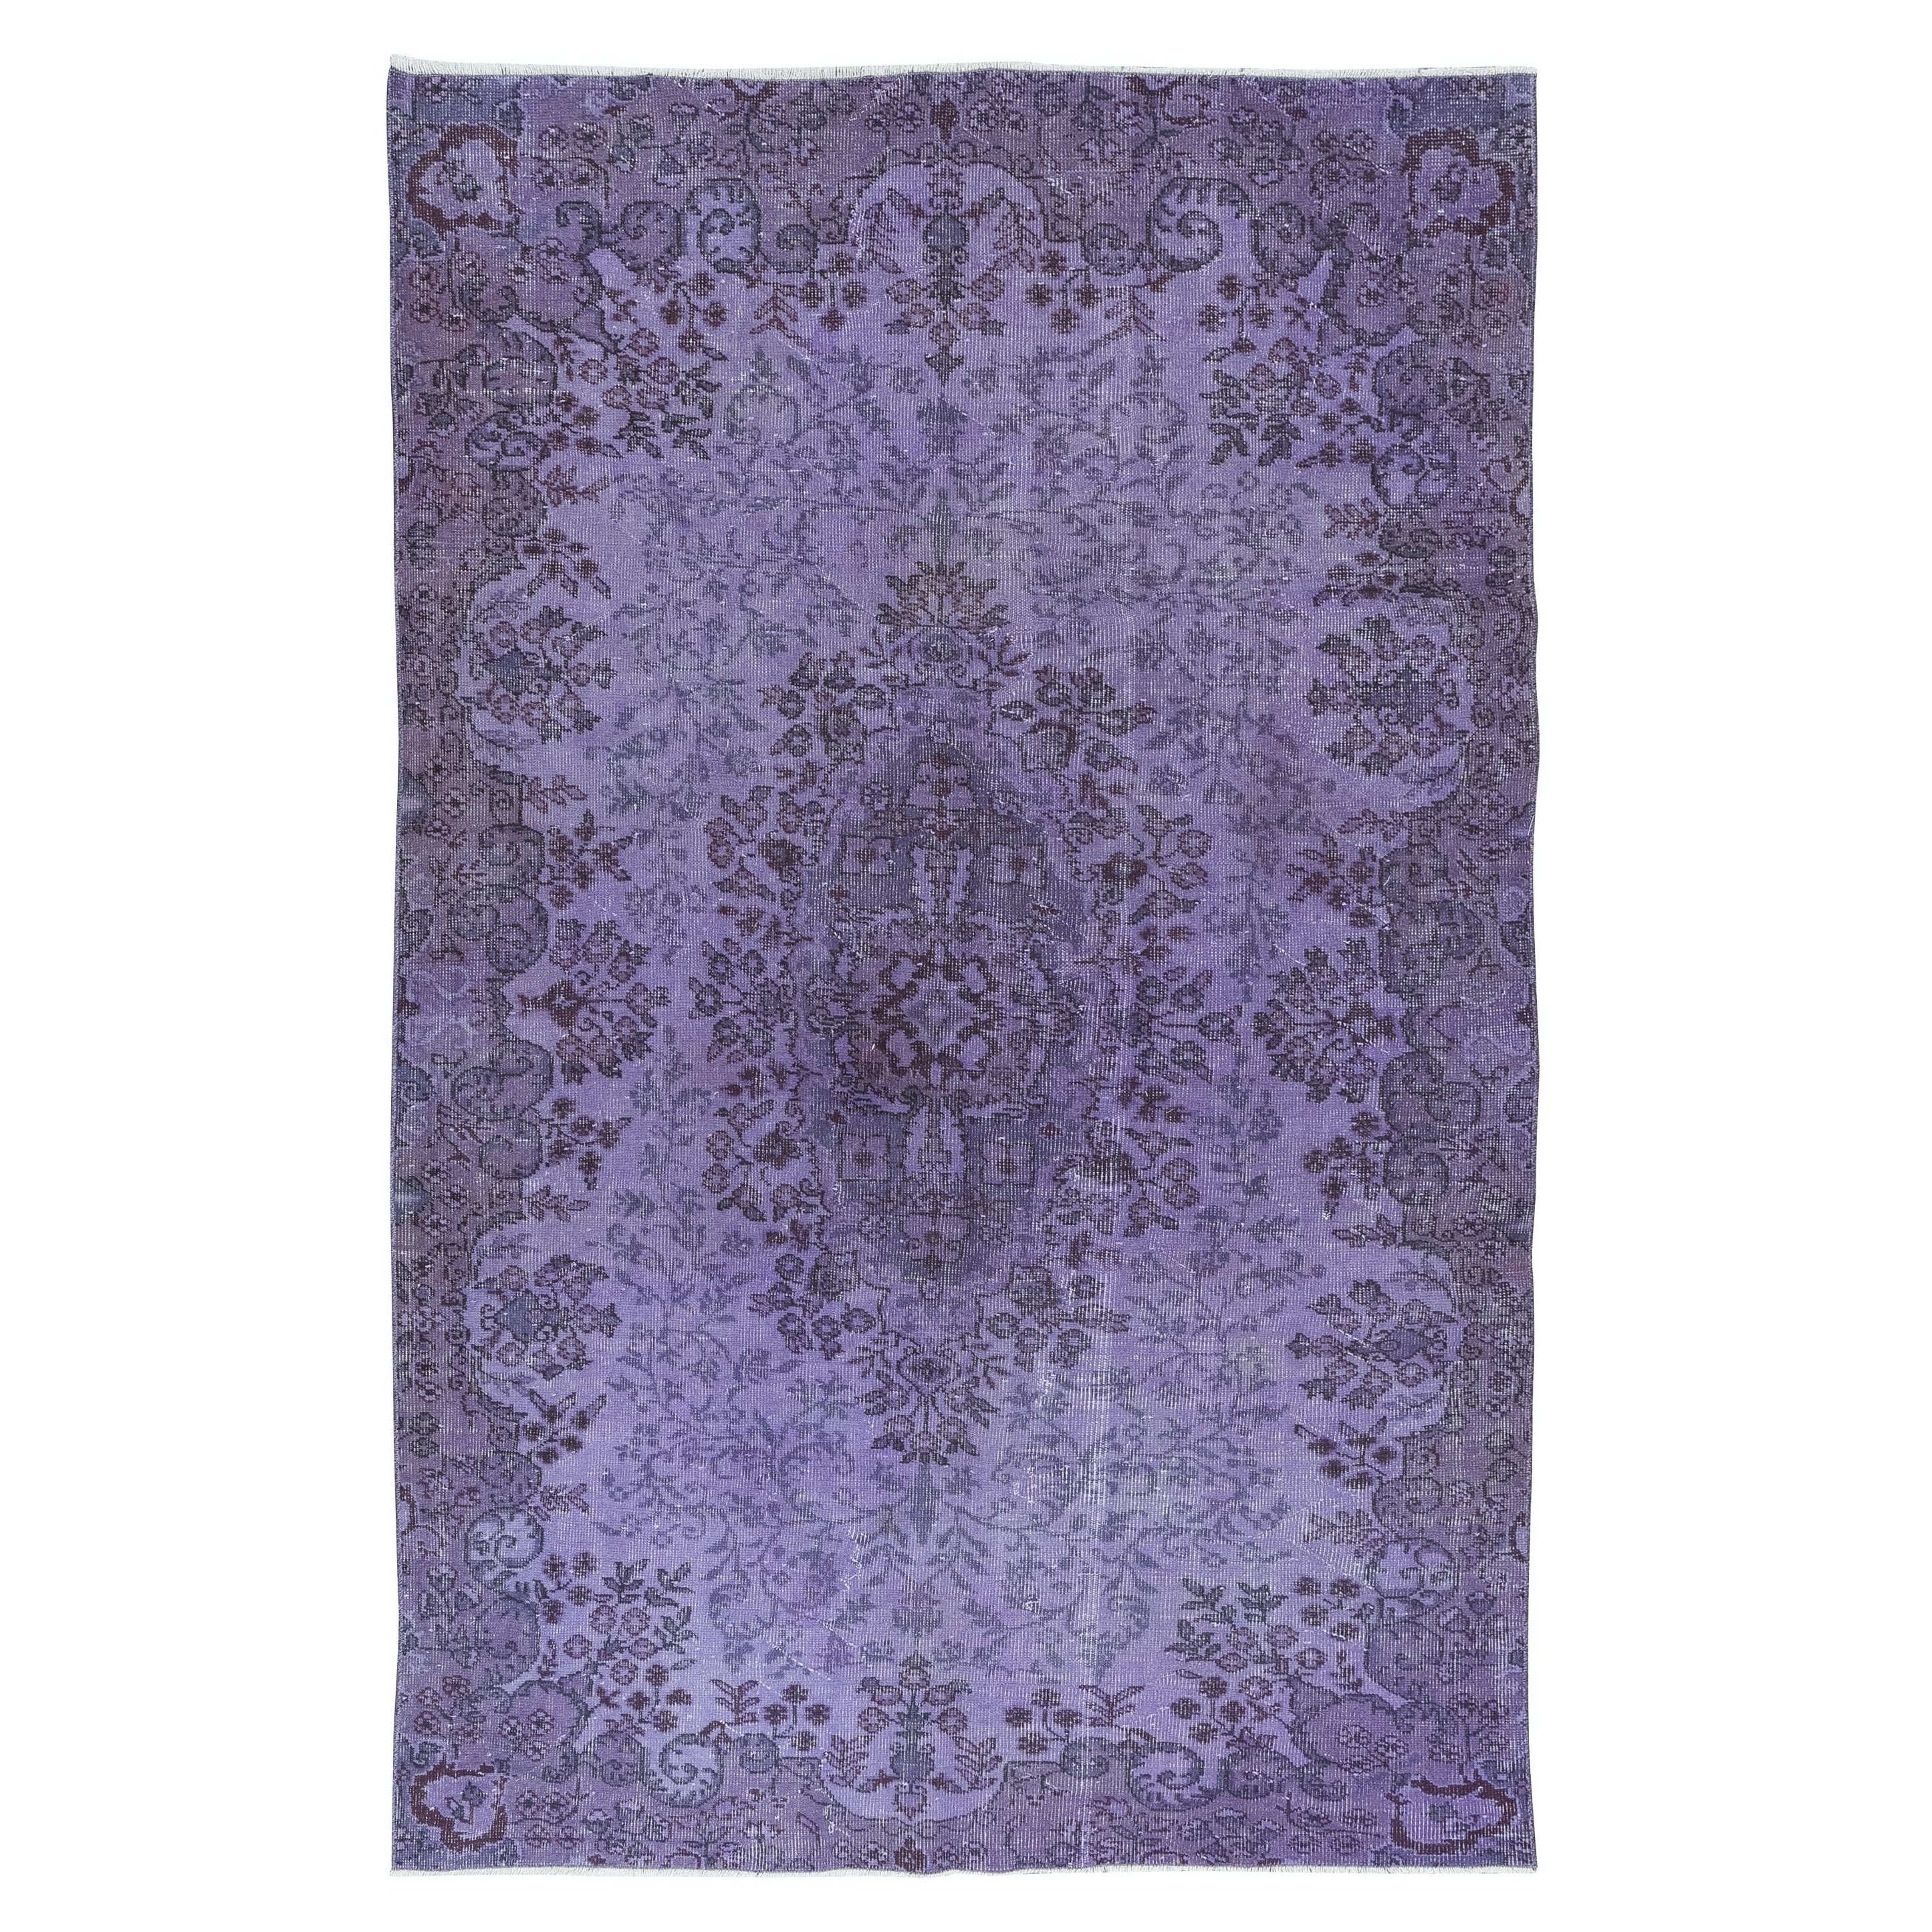 6x9 Ft Deep Purple Handmade Rug, Overdyed Turkish Carpet, Bohemian Rug